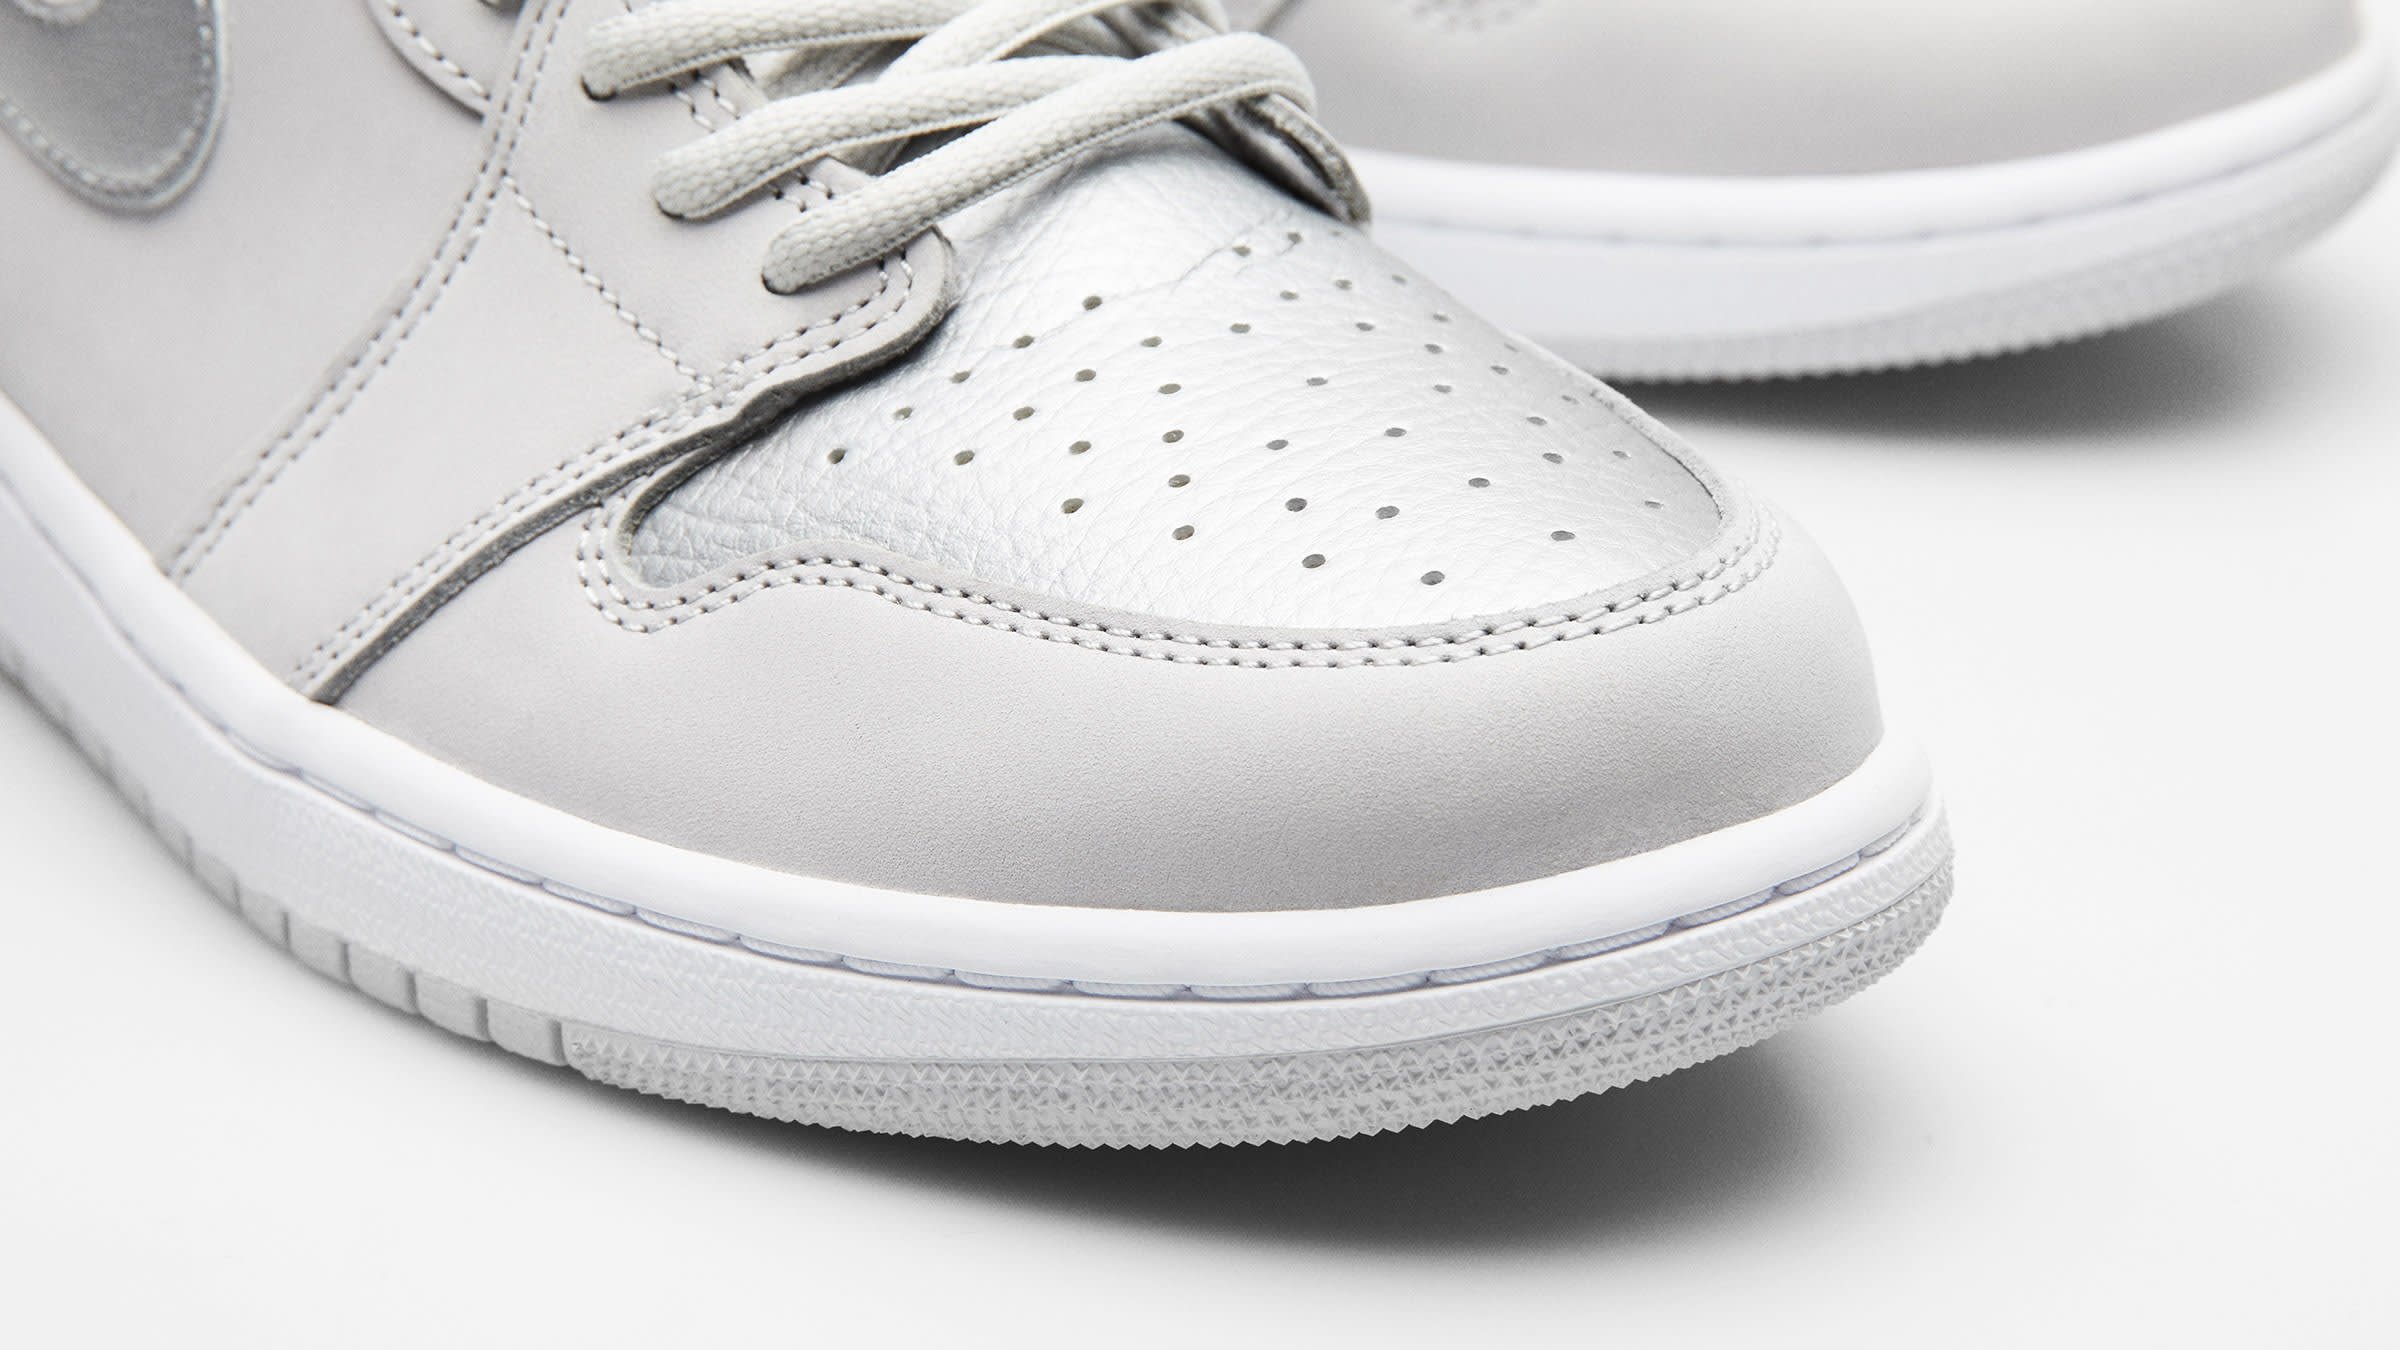 Nike Air Jordan 1 High OG Co JP (Grey, Silver & White) | END. Launches